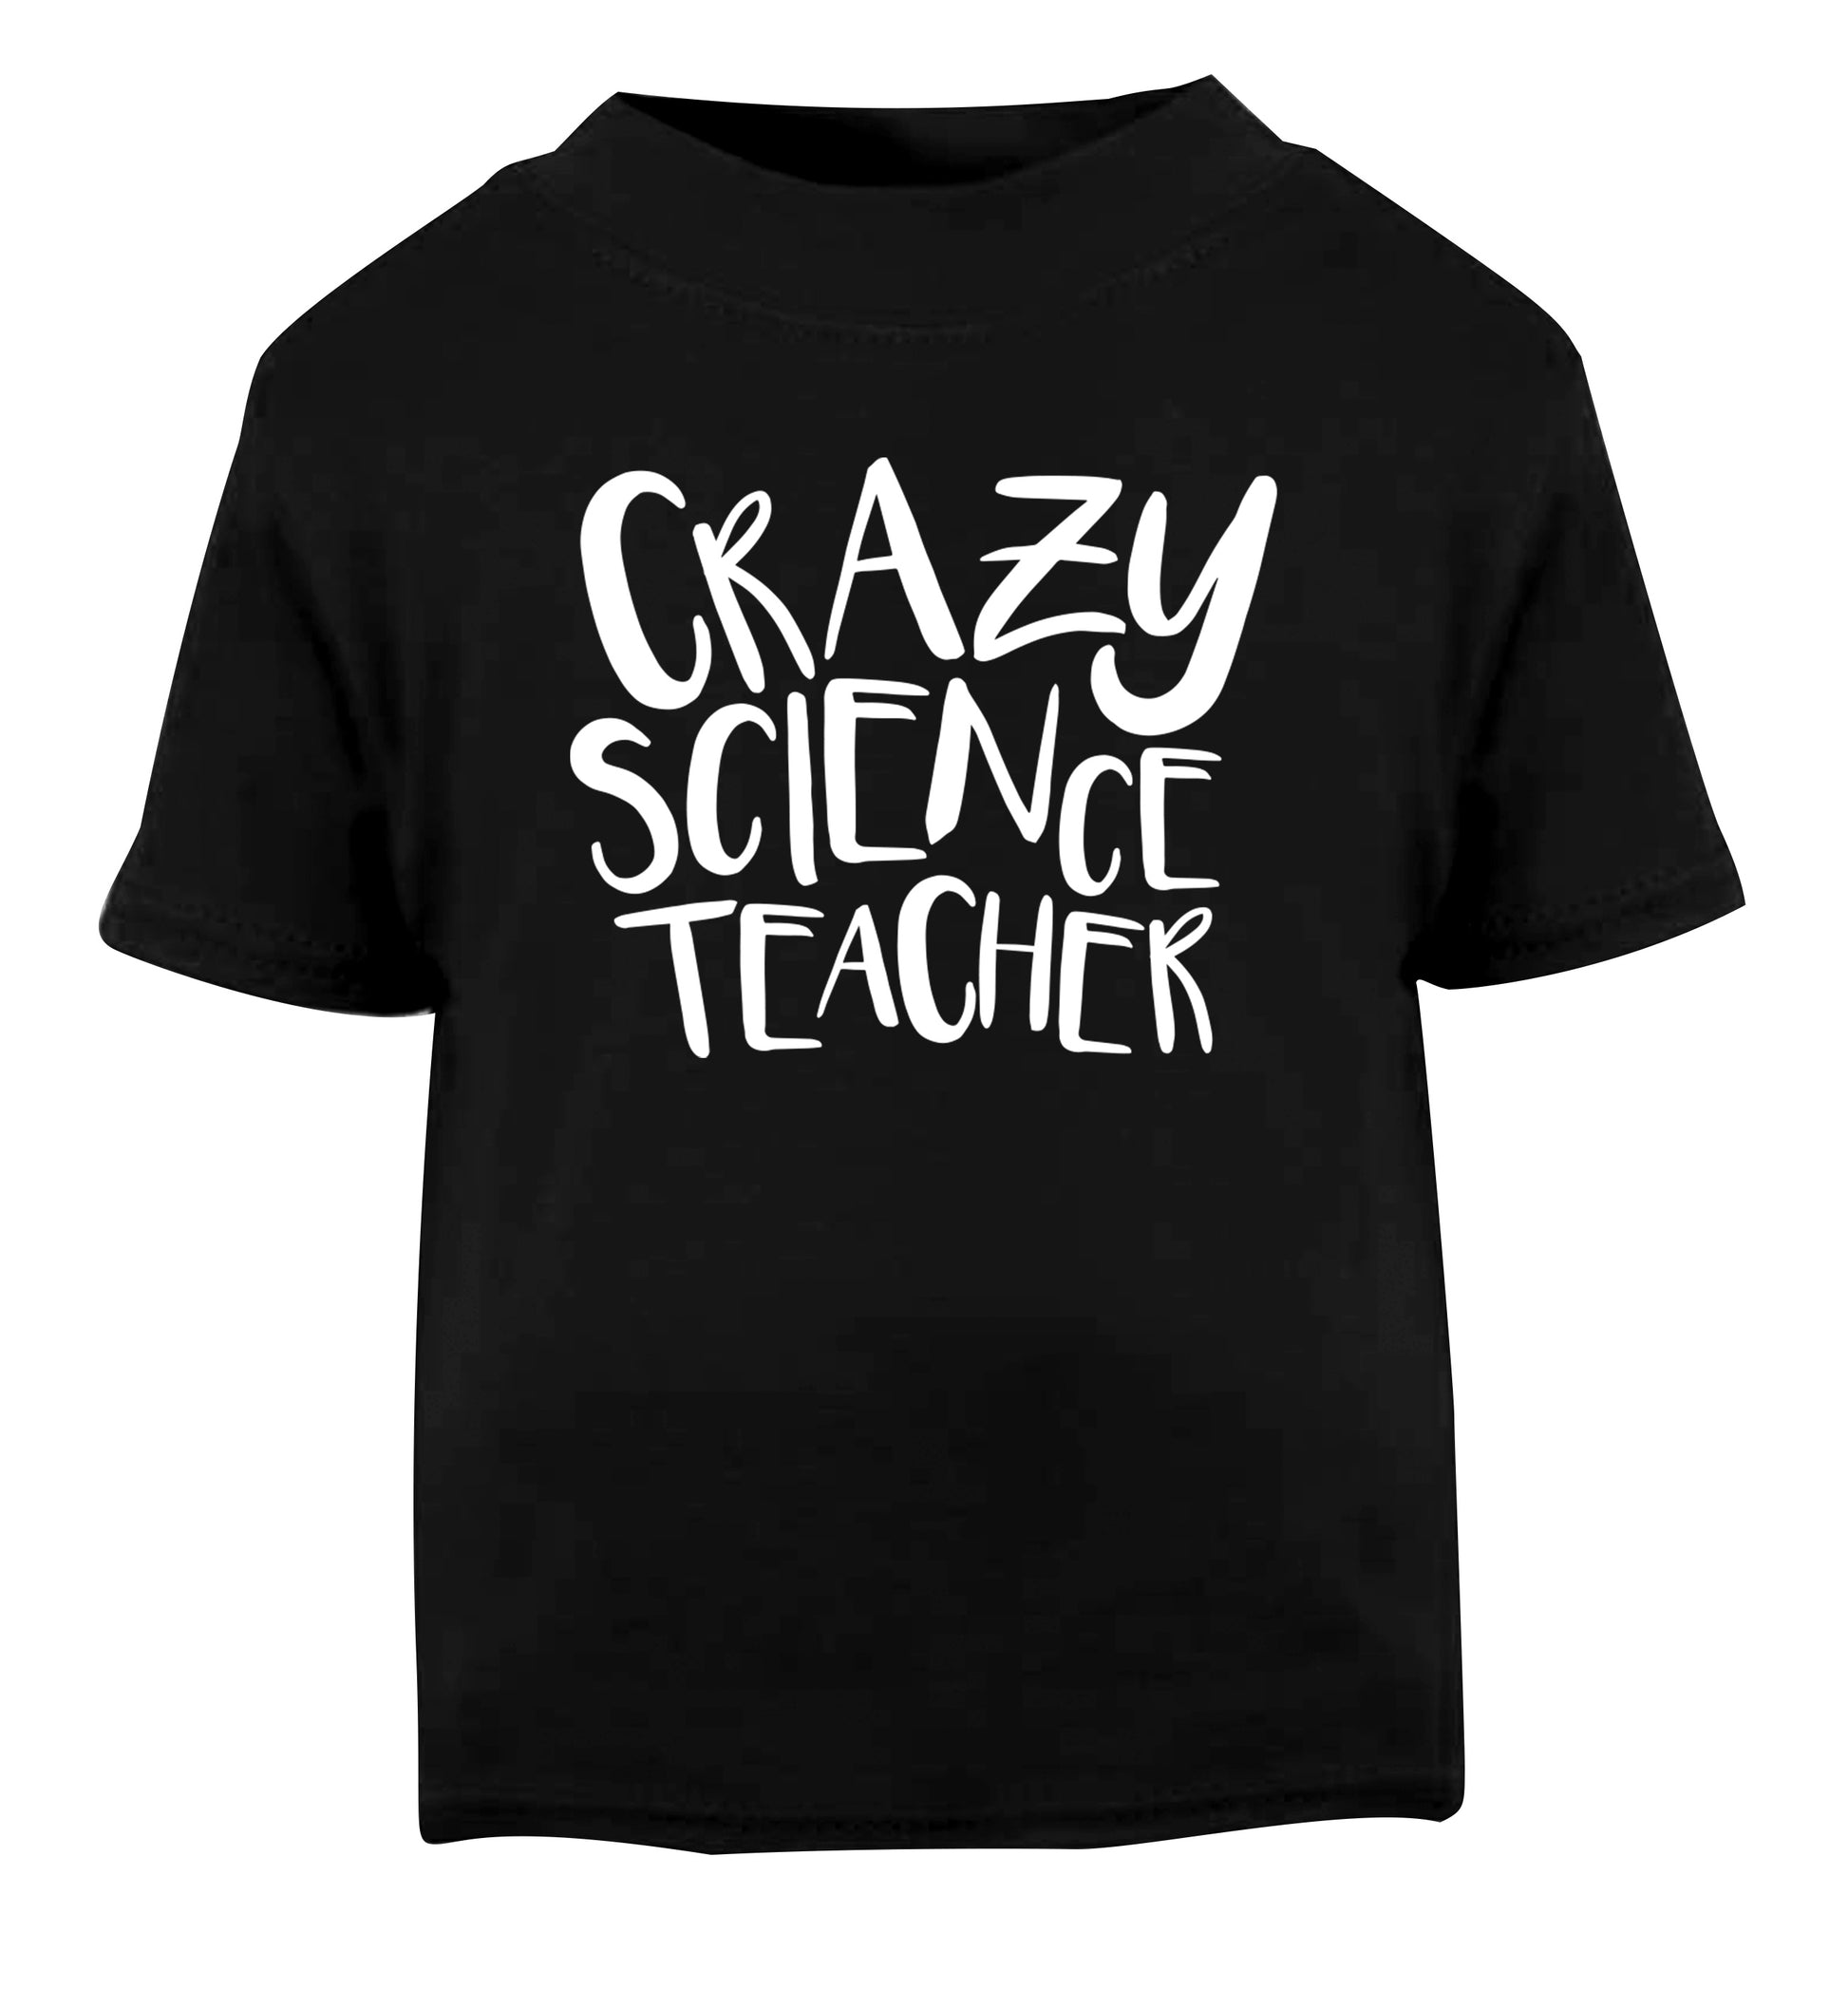 Crazy science teacher Black Baby Toddler Tshirt 2 years